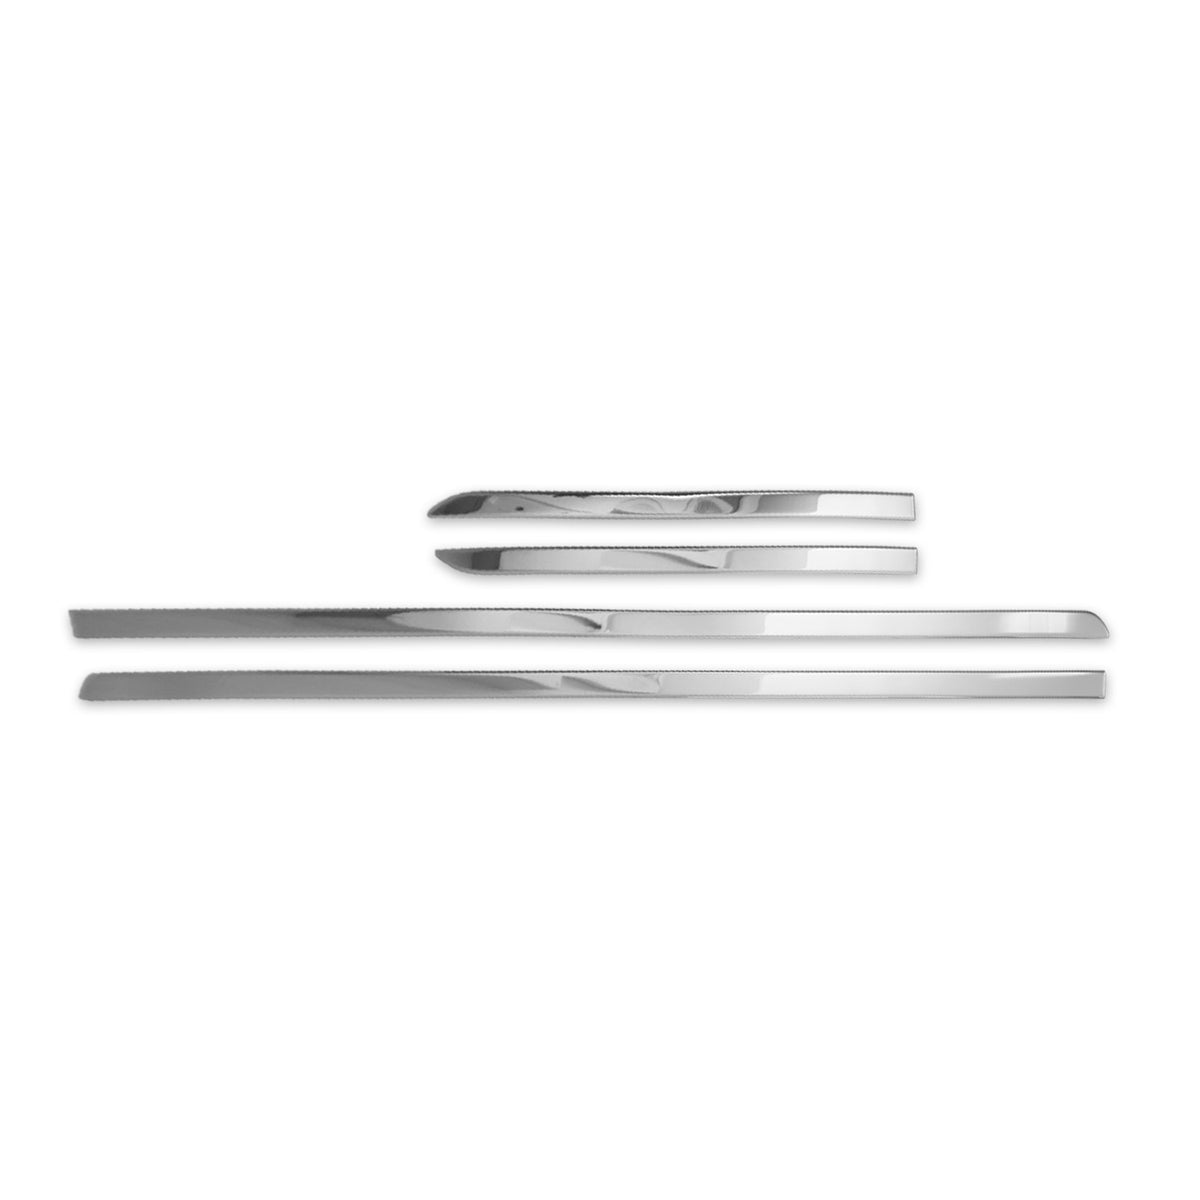 Seitentürleiste Türschutzleiste für Volvo V70 & V90 Edelstahl Chrom Silber 2x